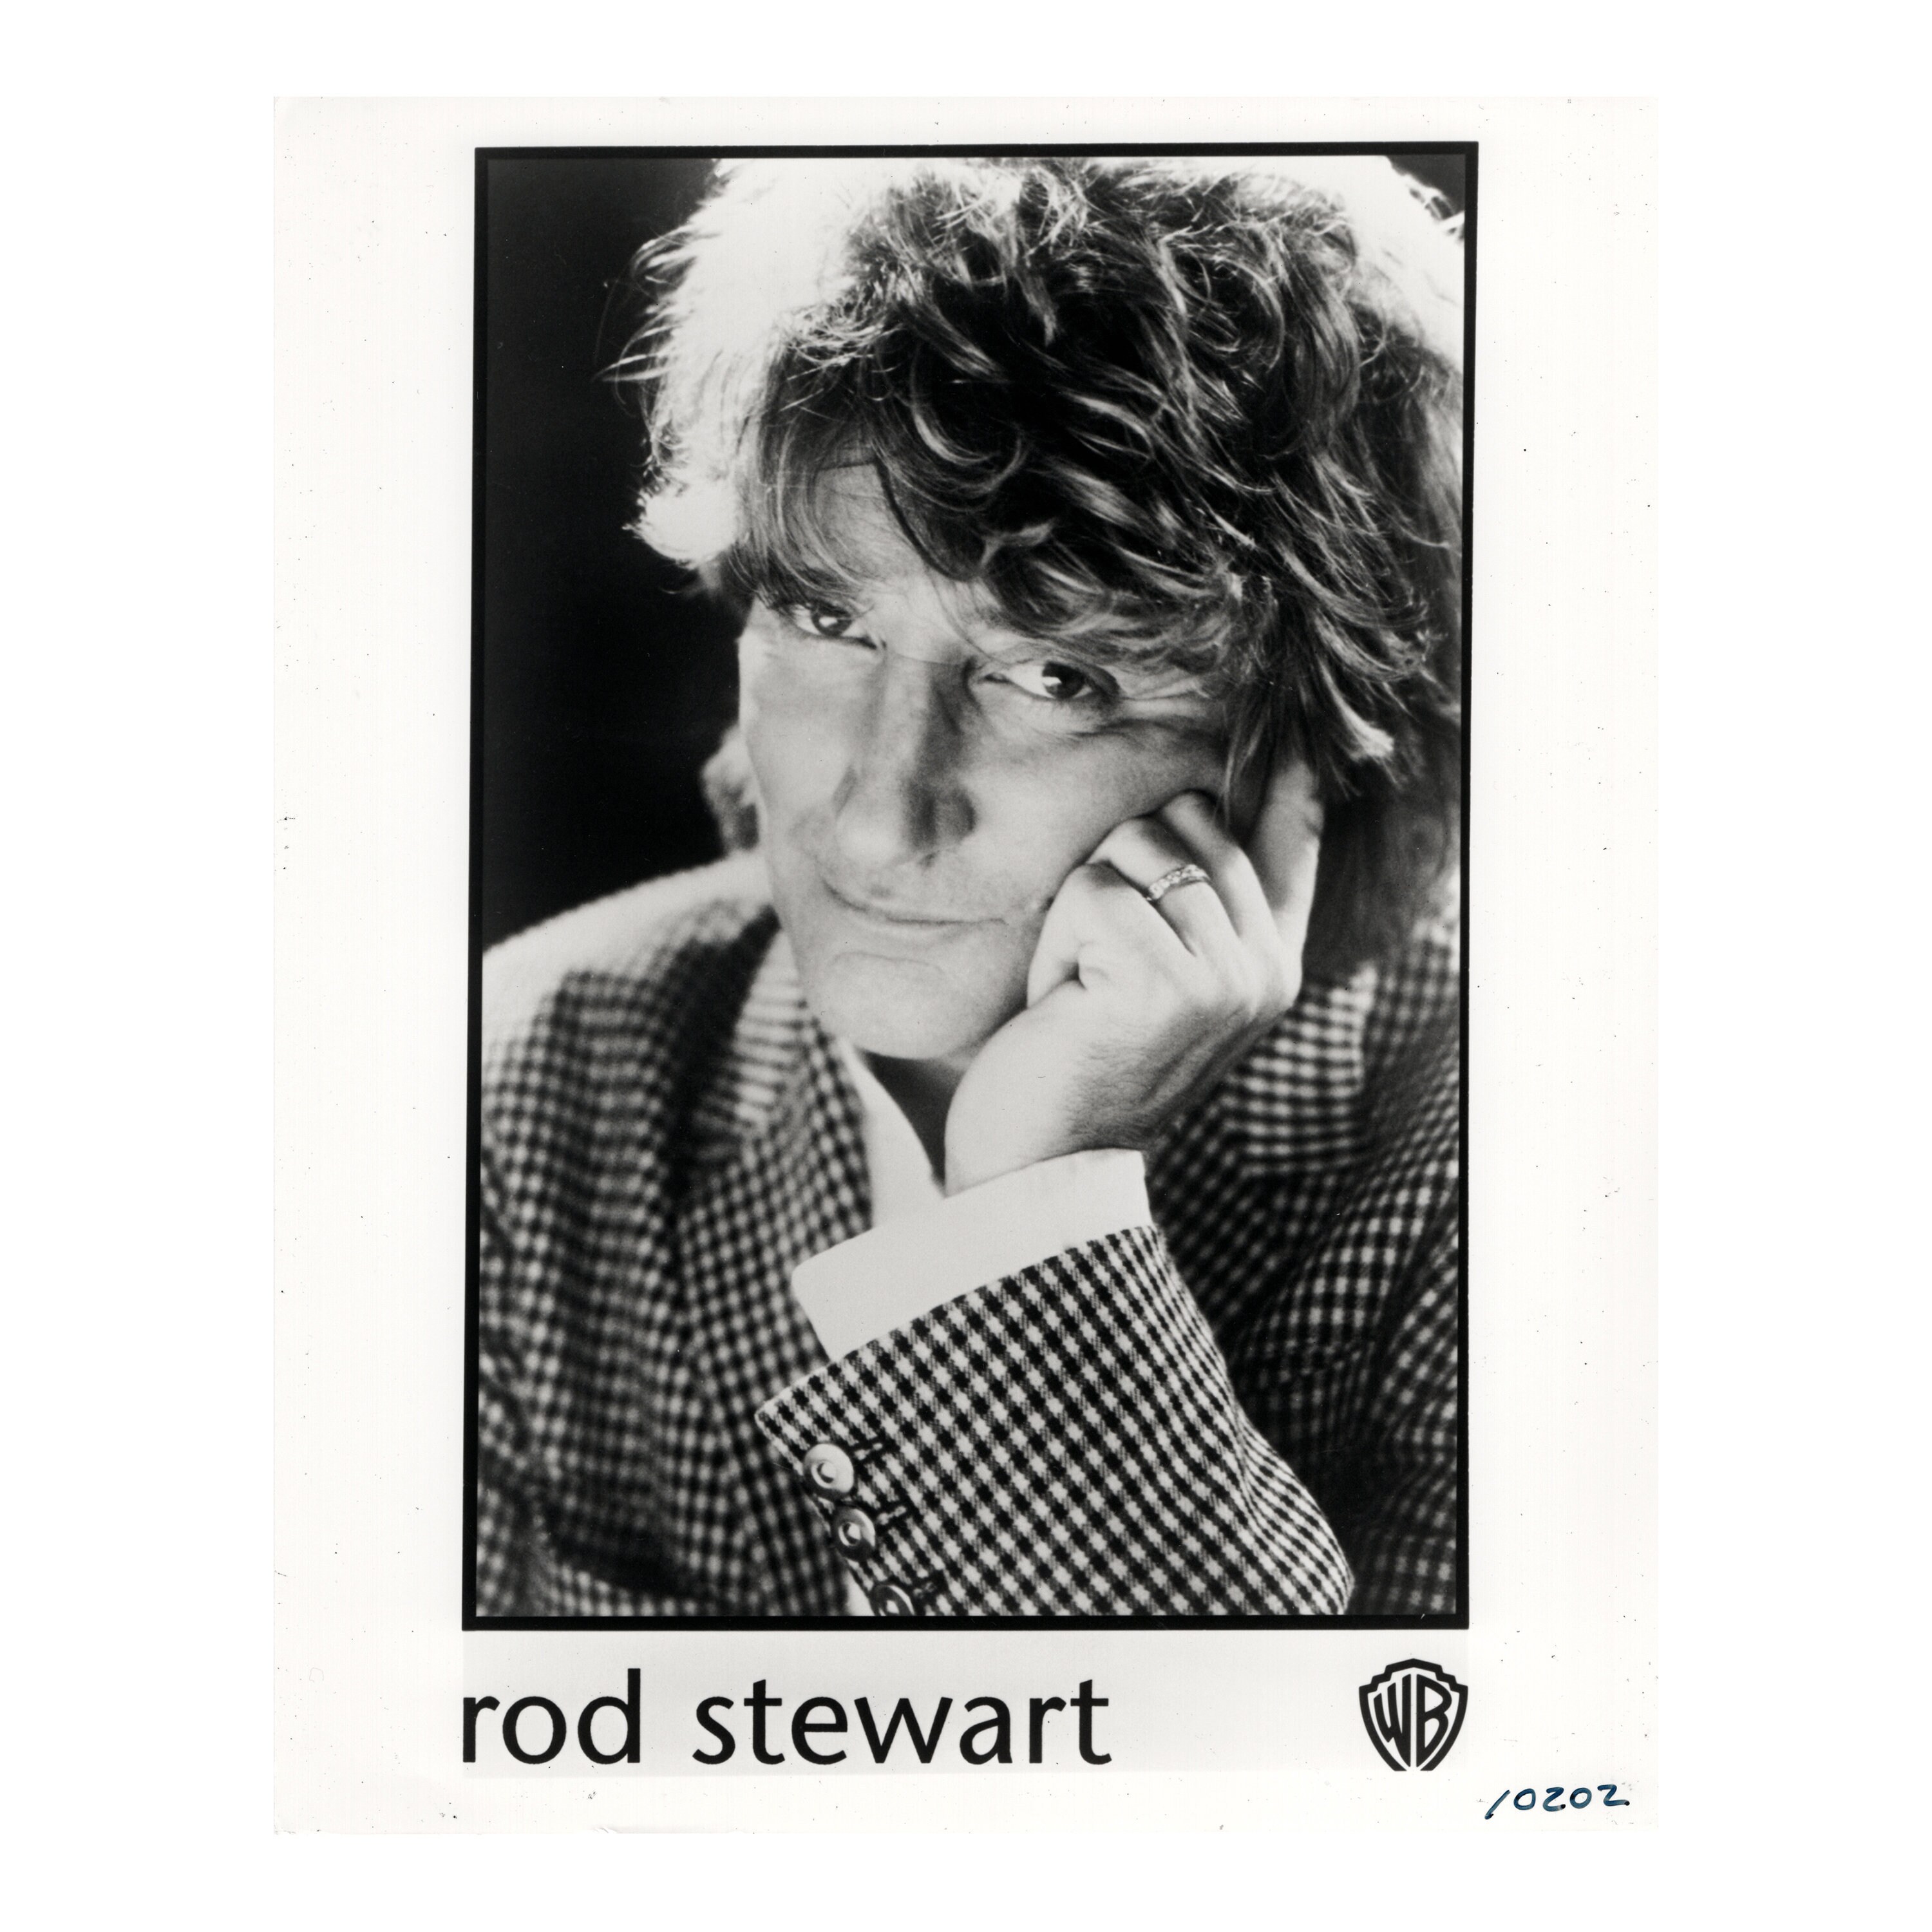 Never a Dull Moment (Rod Stewart album) - Wikipedia